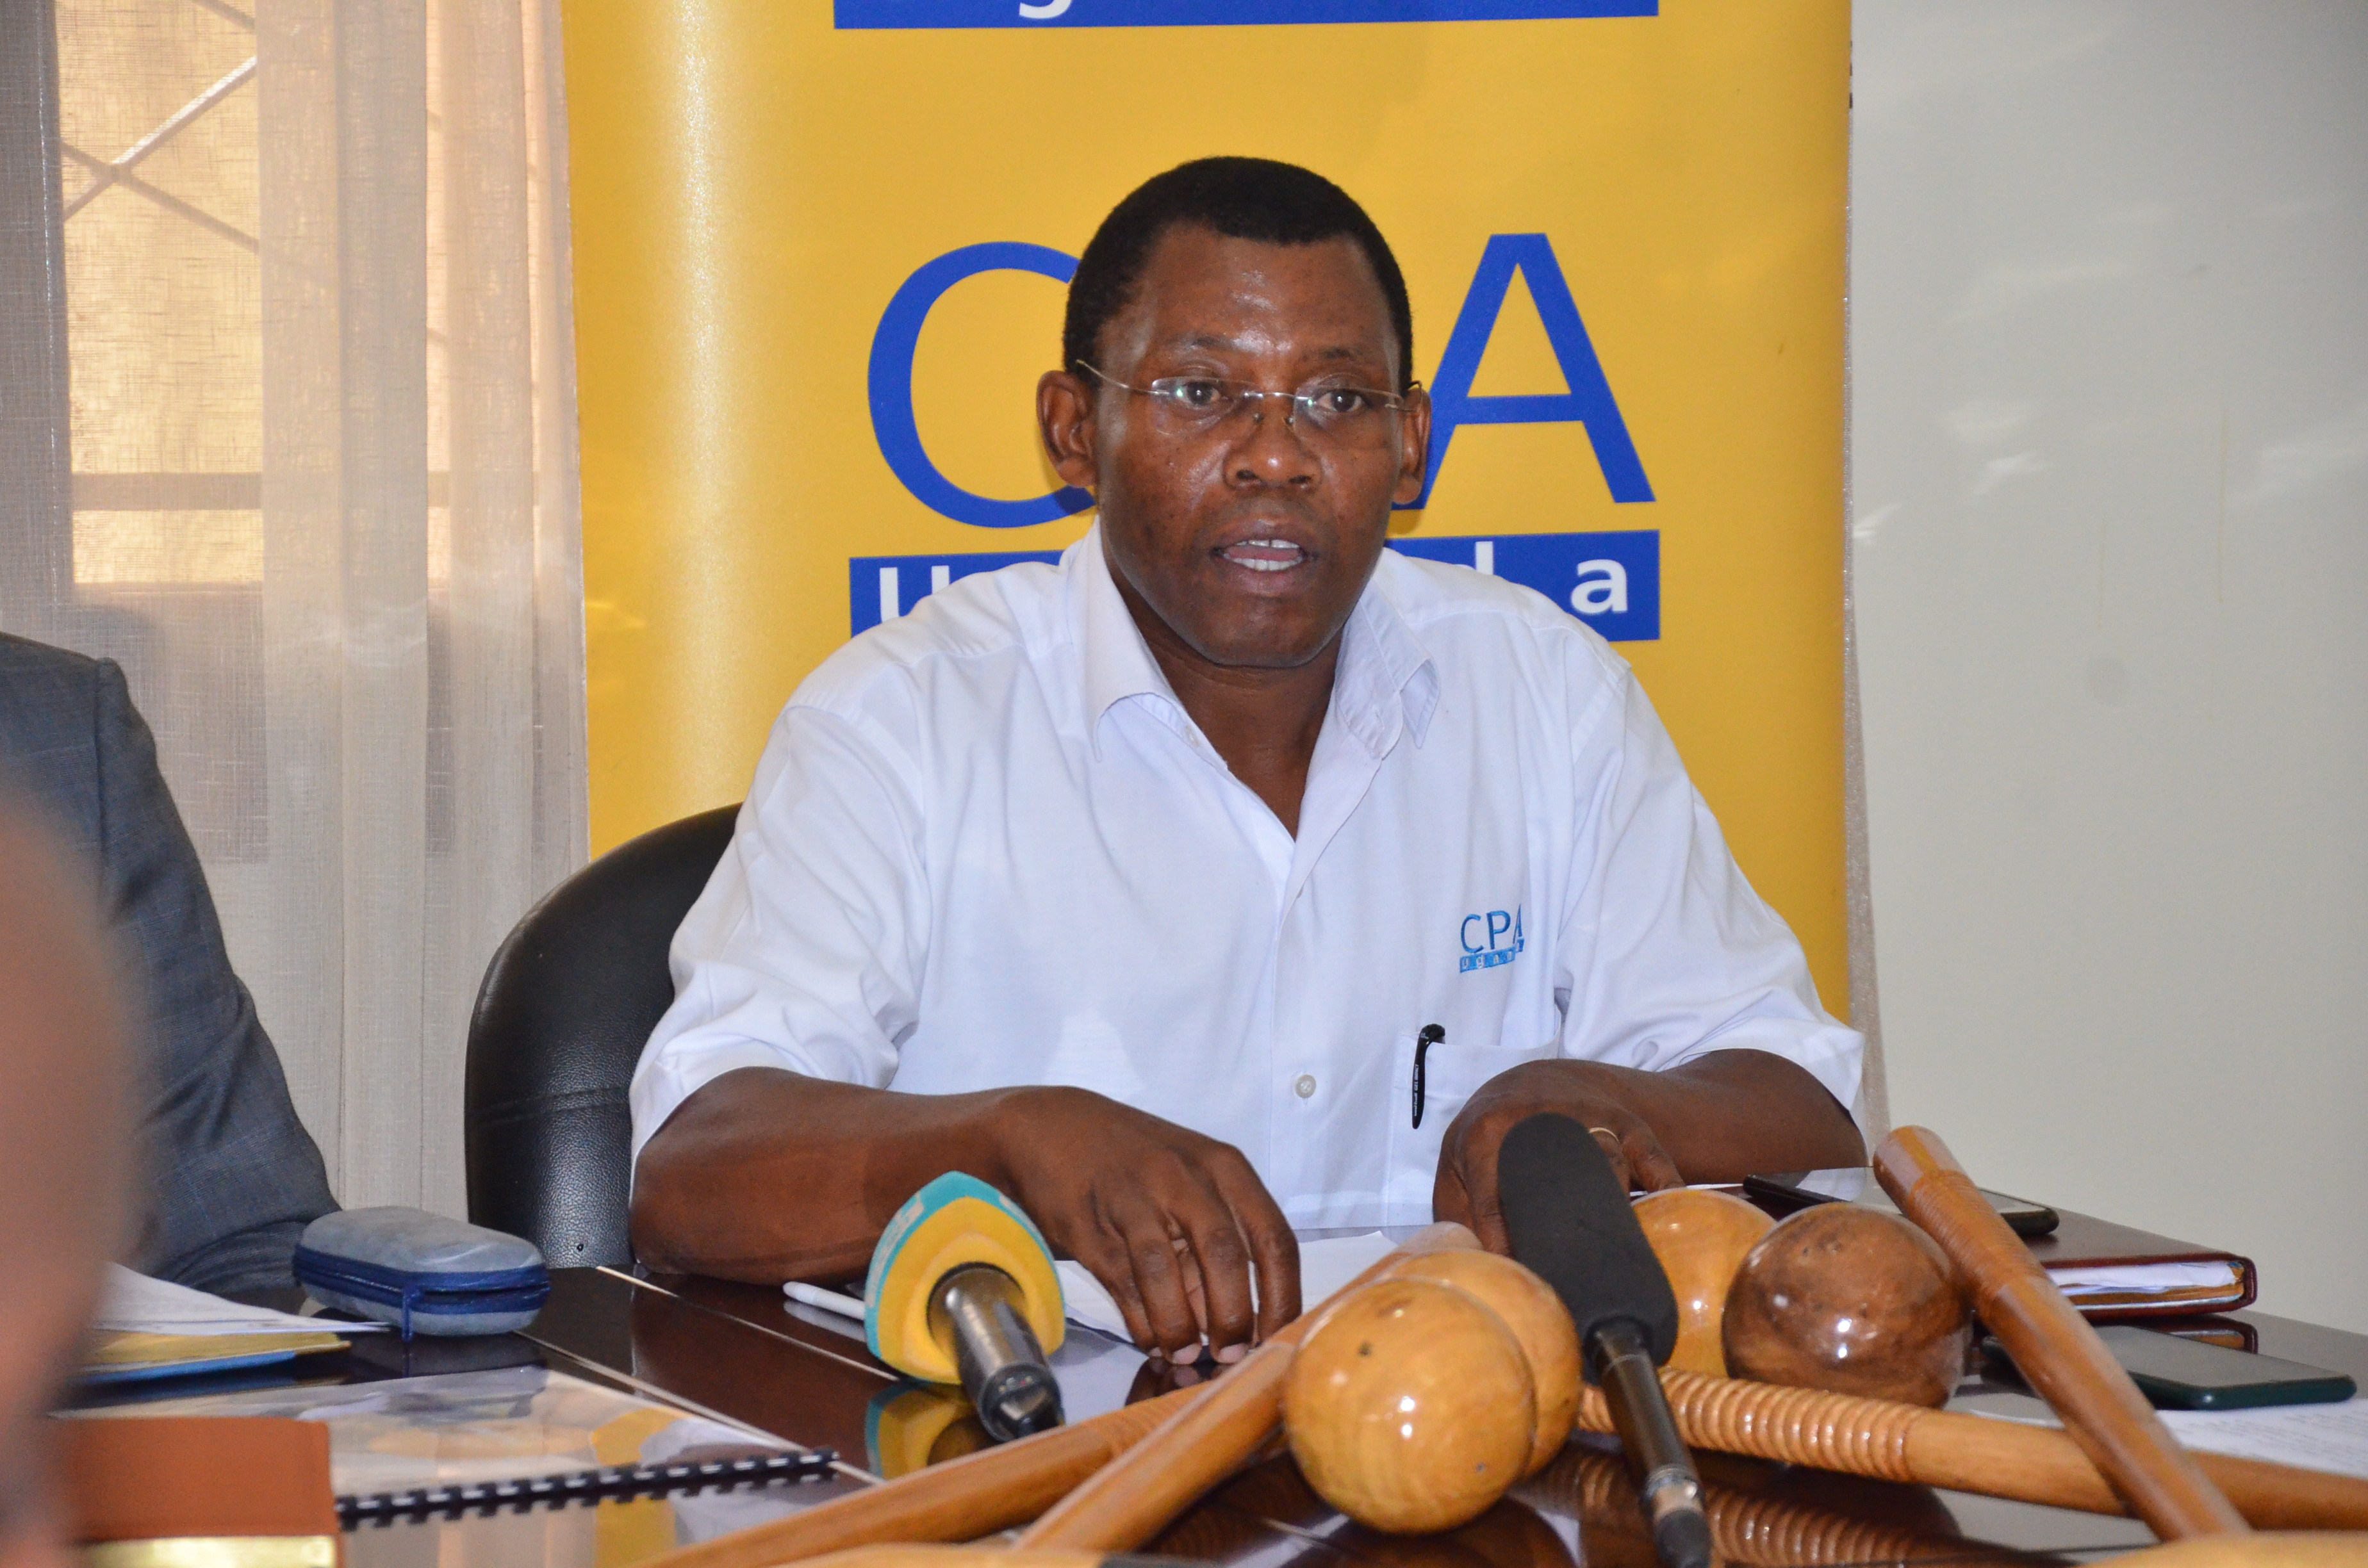 The CEO of ICPAU, CPA Derick Nkajja